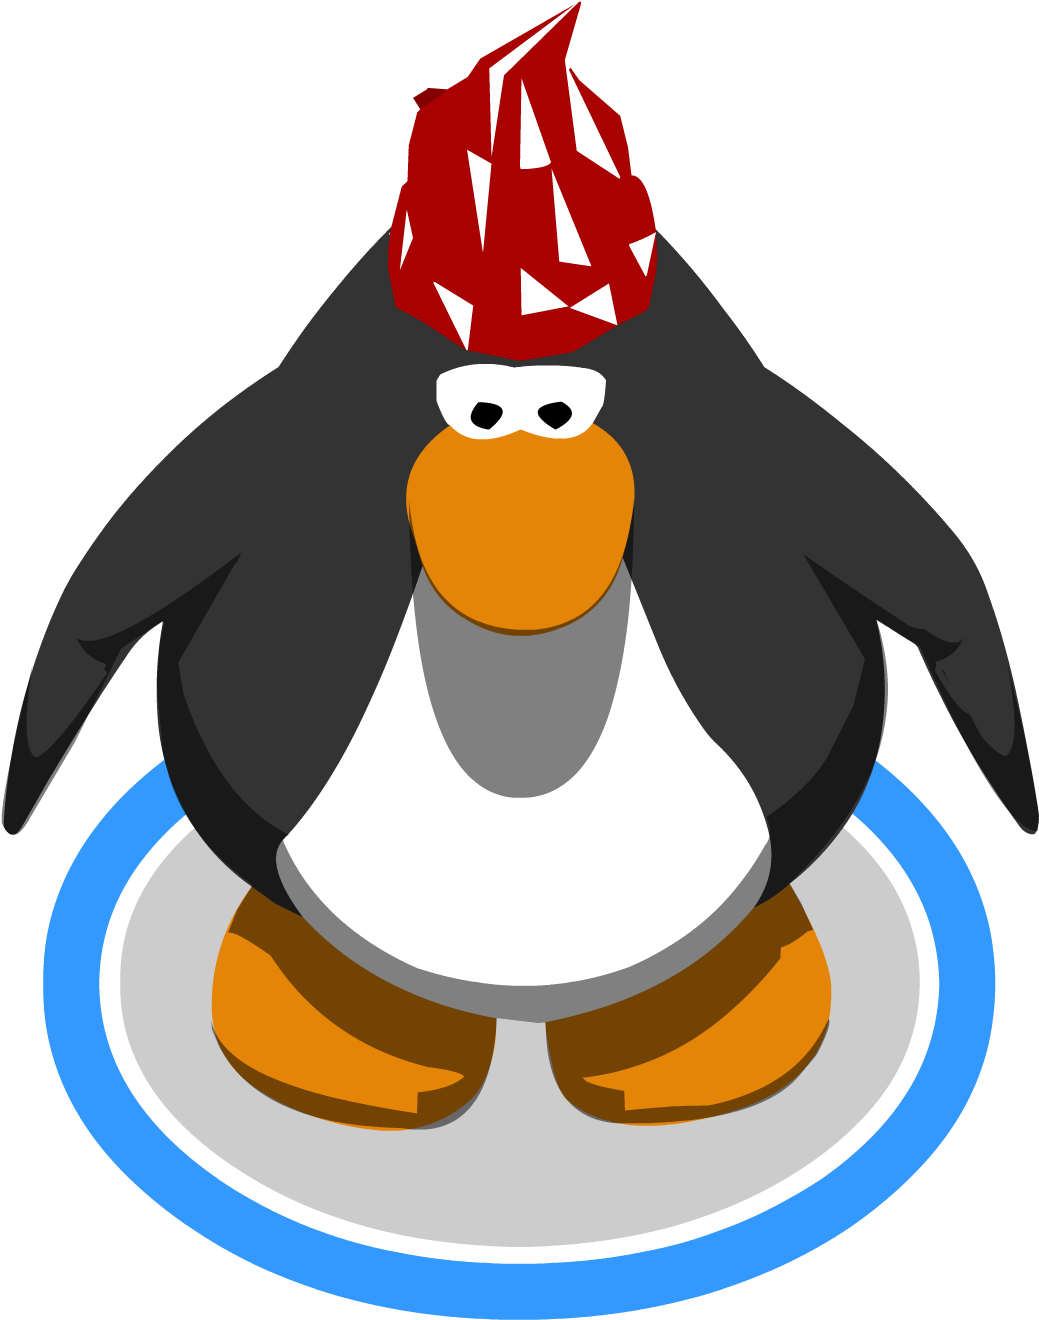 Red Paisley Bandana112233 - Club Penguin 10th Anniversary Hat (1059x1370)